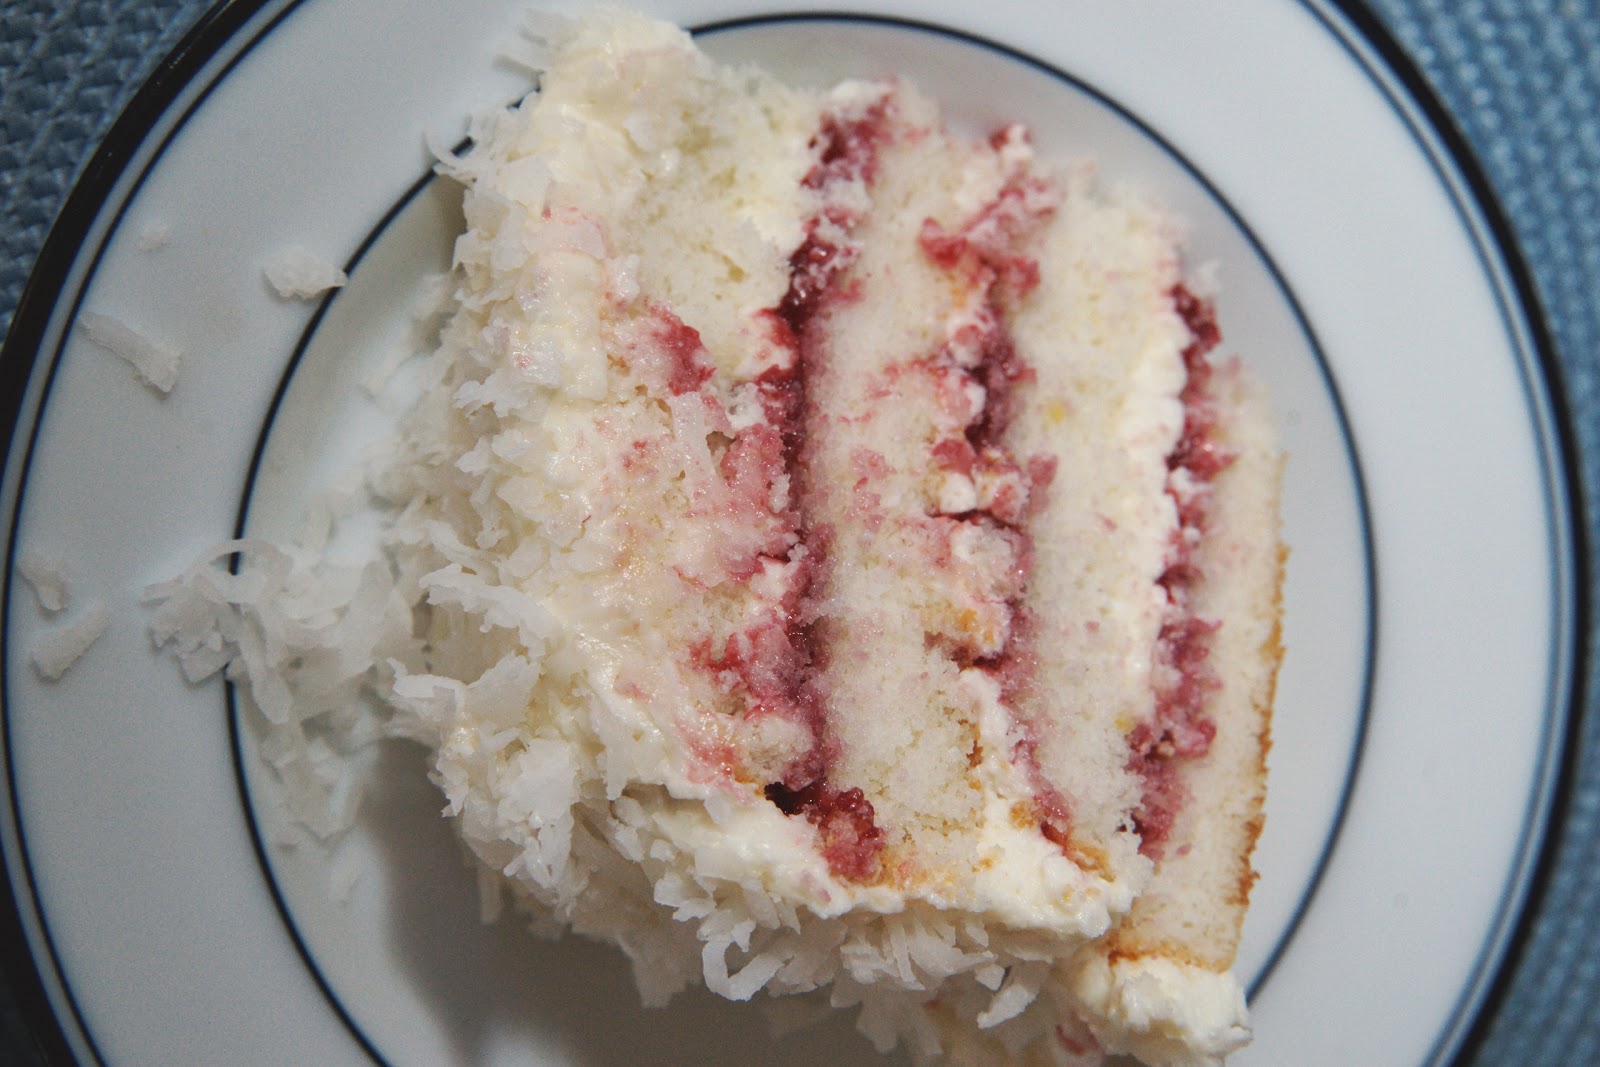 Savory Sweet and Satisfying: Raspberry Lemon Coconut Cake